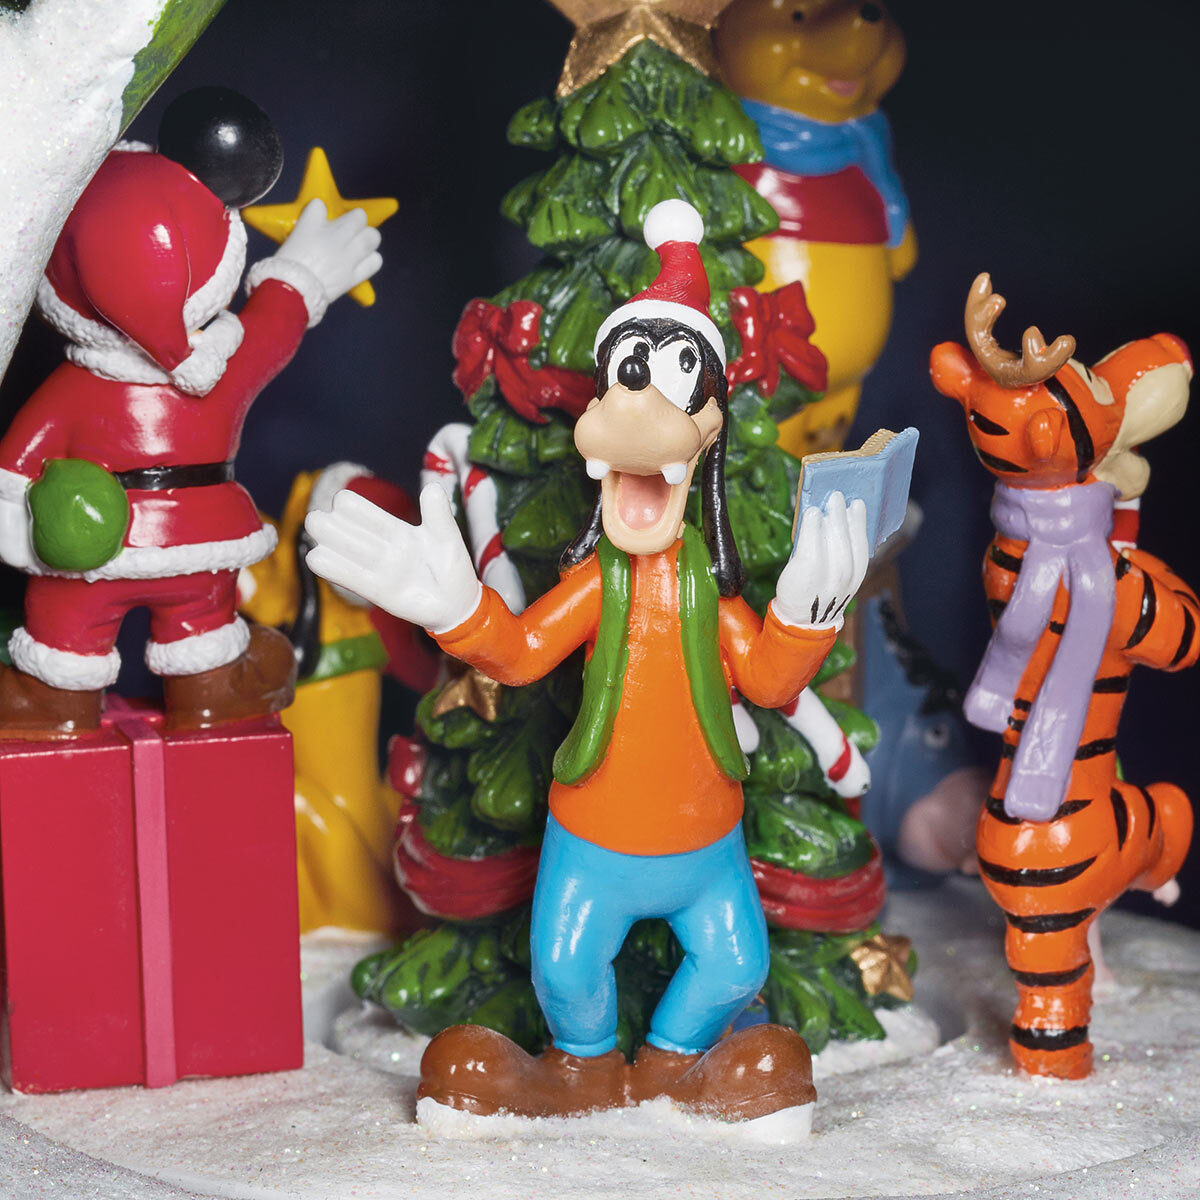 Buy Disney Animated Tree CloseUp1 Image at Costco.co.uk